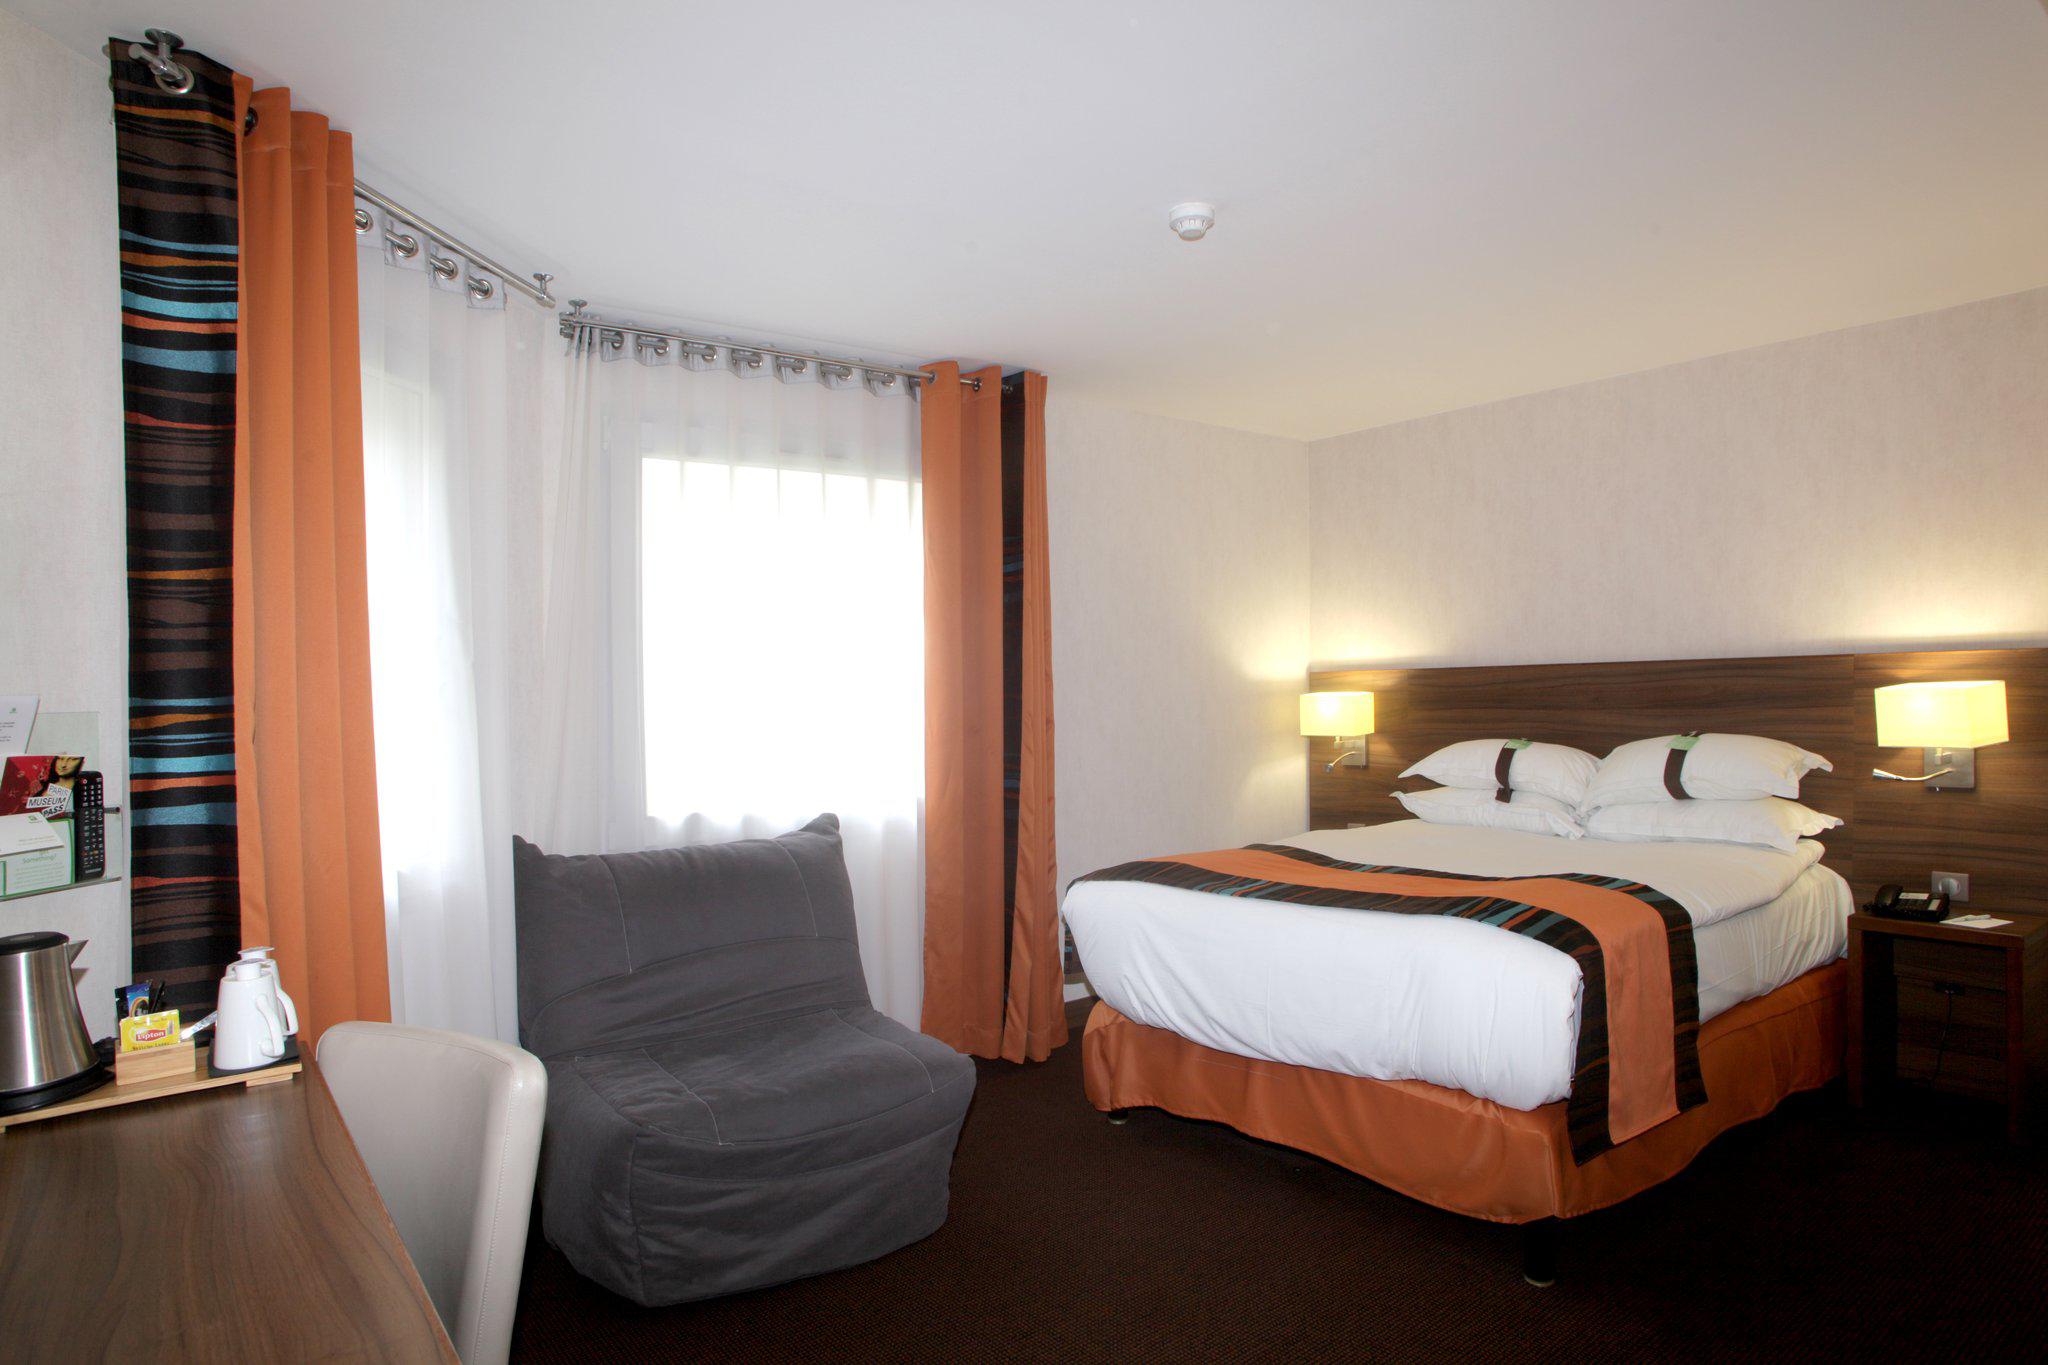 Images Holiday Inn Paris - Montmartre, an IHG Hotel